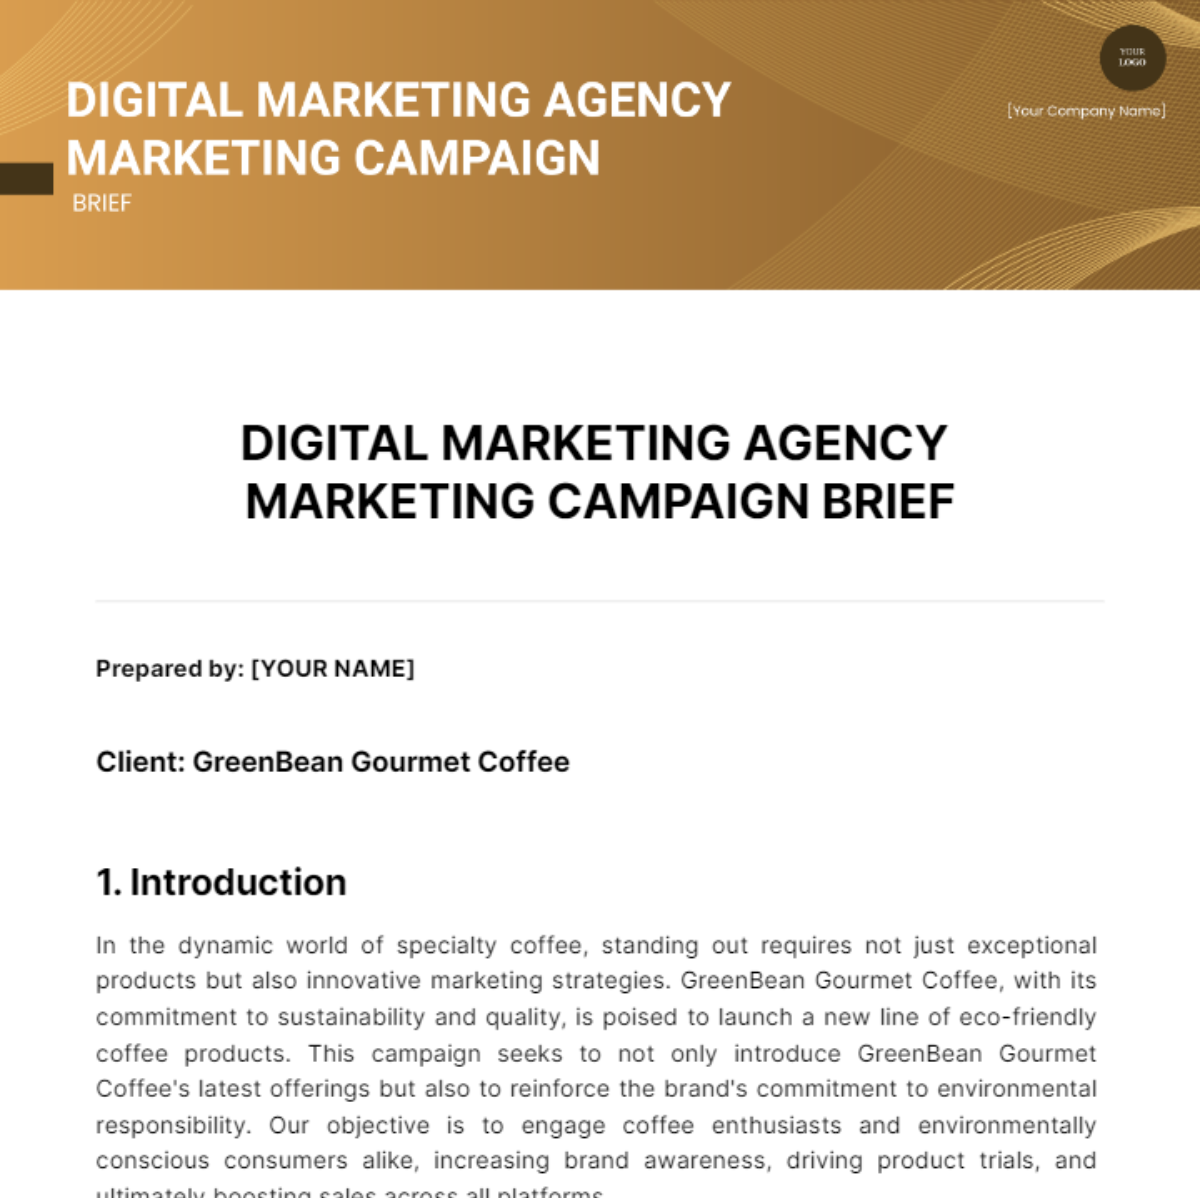 Digital Marketing Agency Marketing Campaign Brief Template